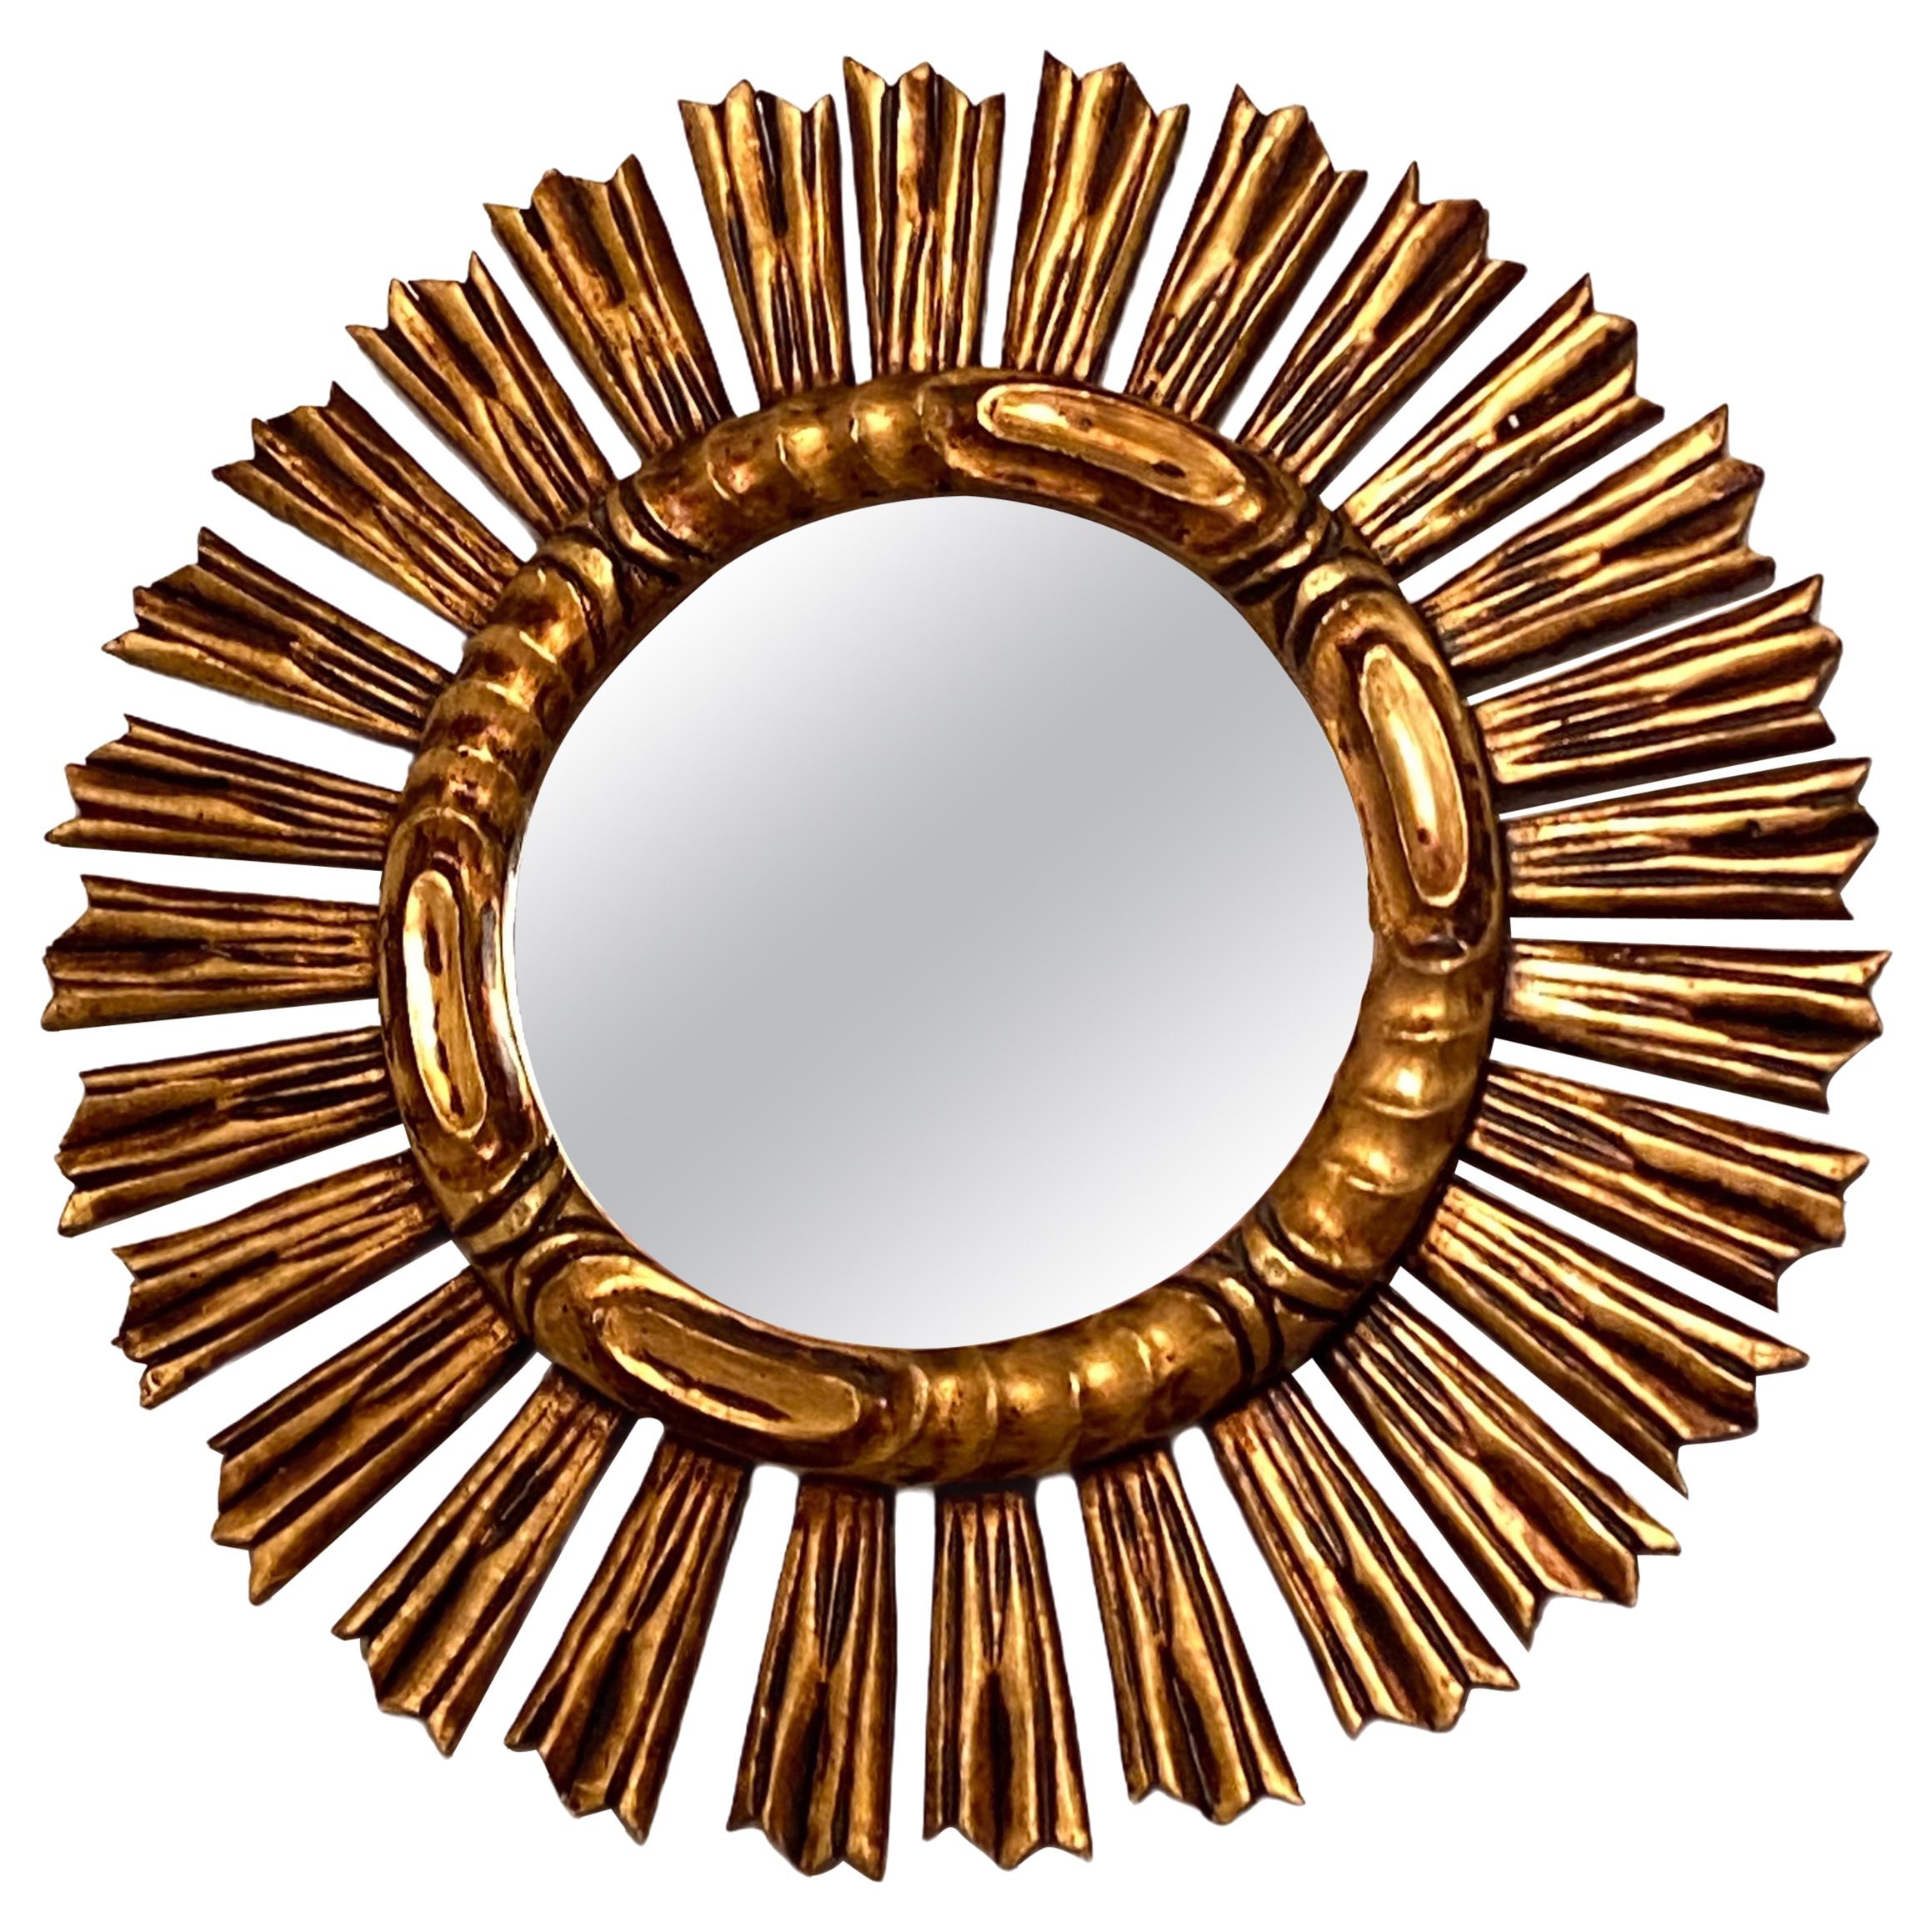 Large Starburst Sunburst Gilded Wood Mirror, circa 1930s